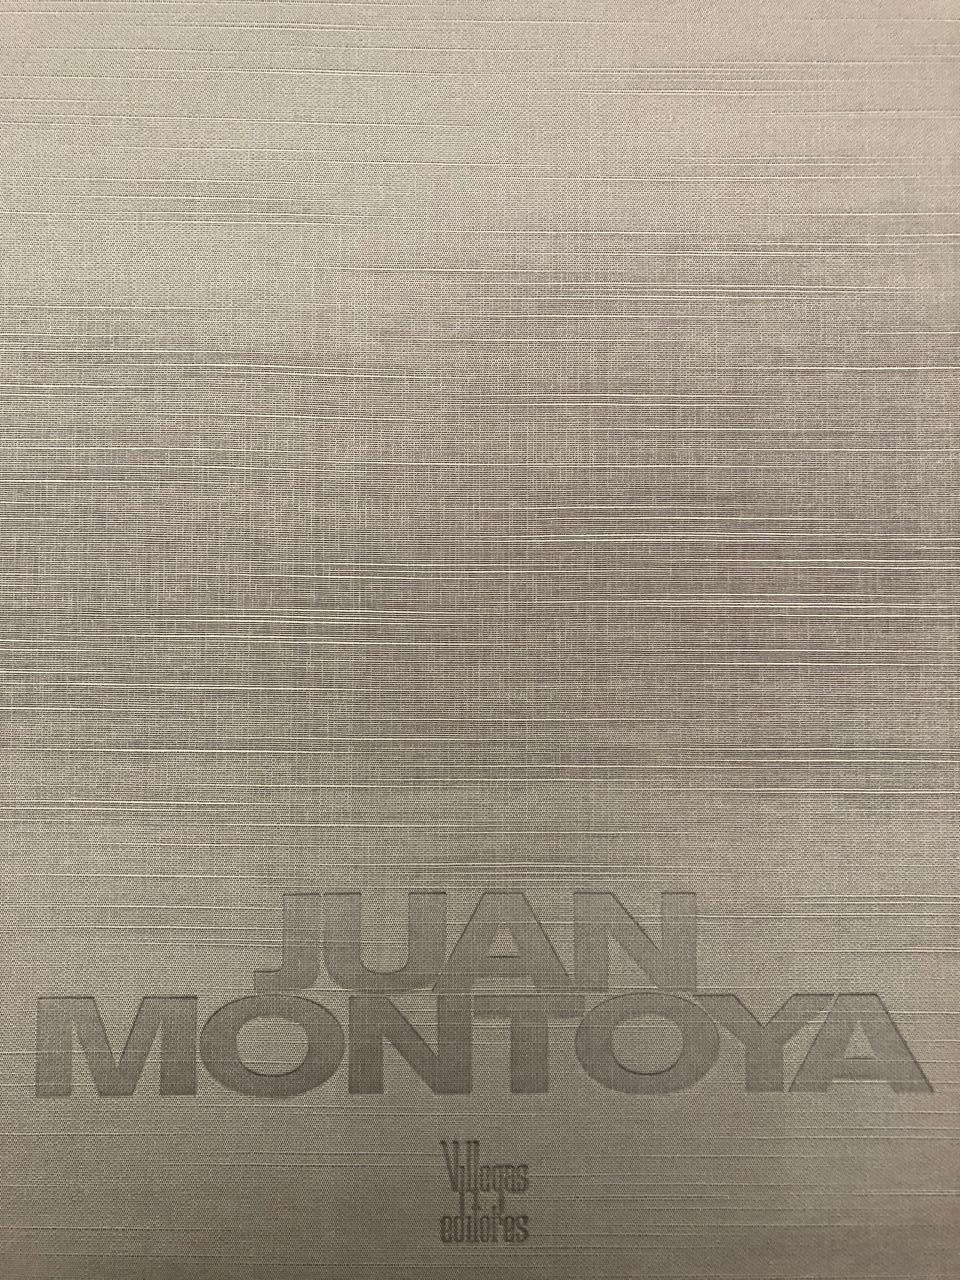 Juan Montoya Design Book-Spanish Edition Signed For Sale 1